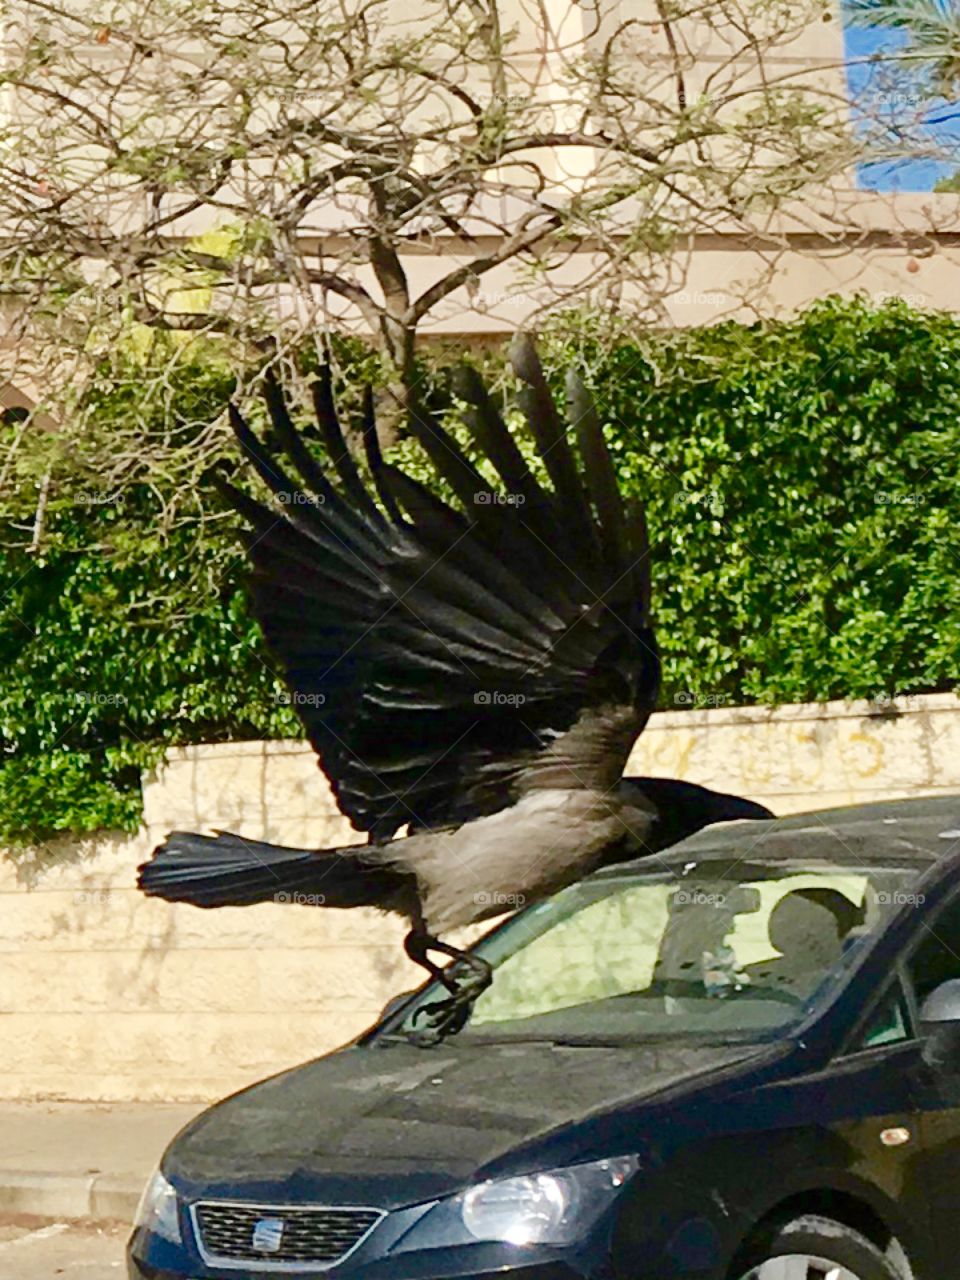 A huge crow in flight